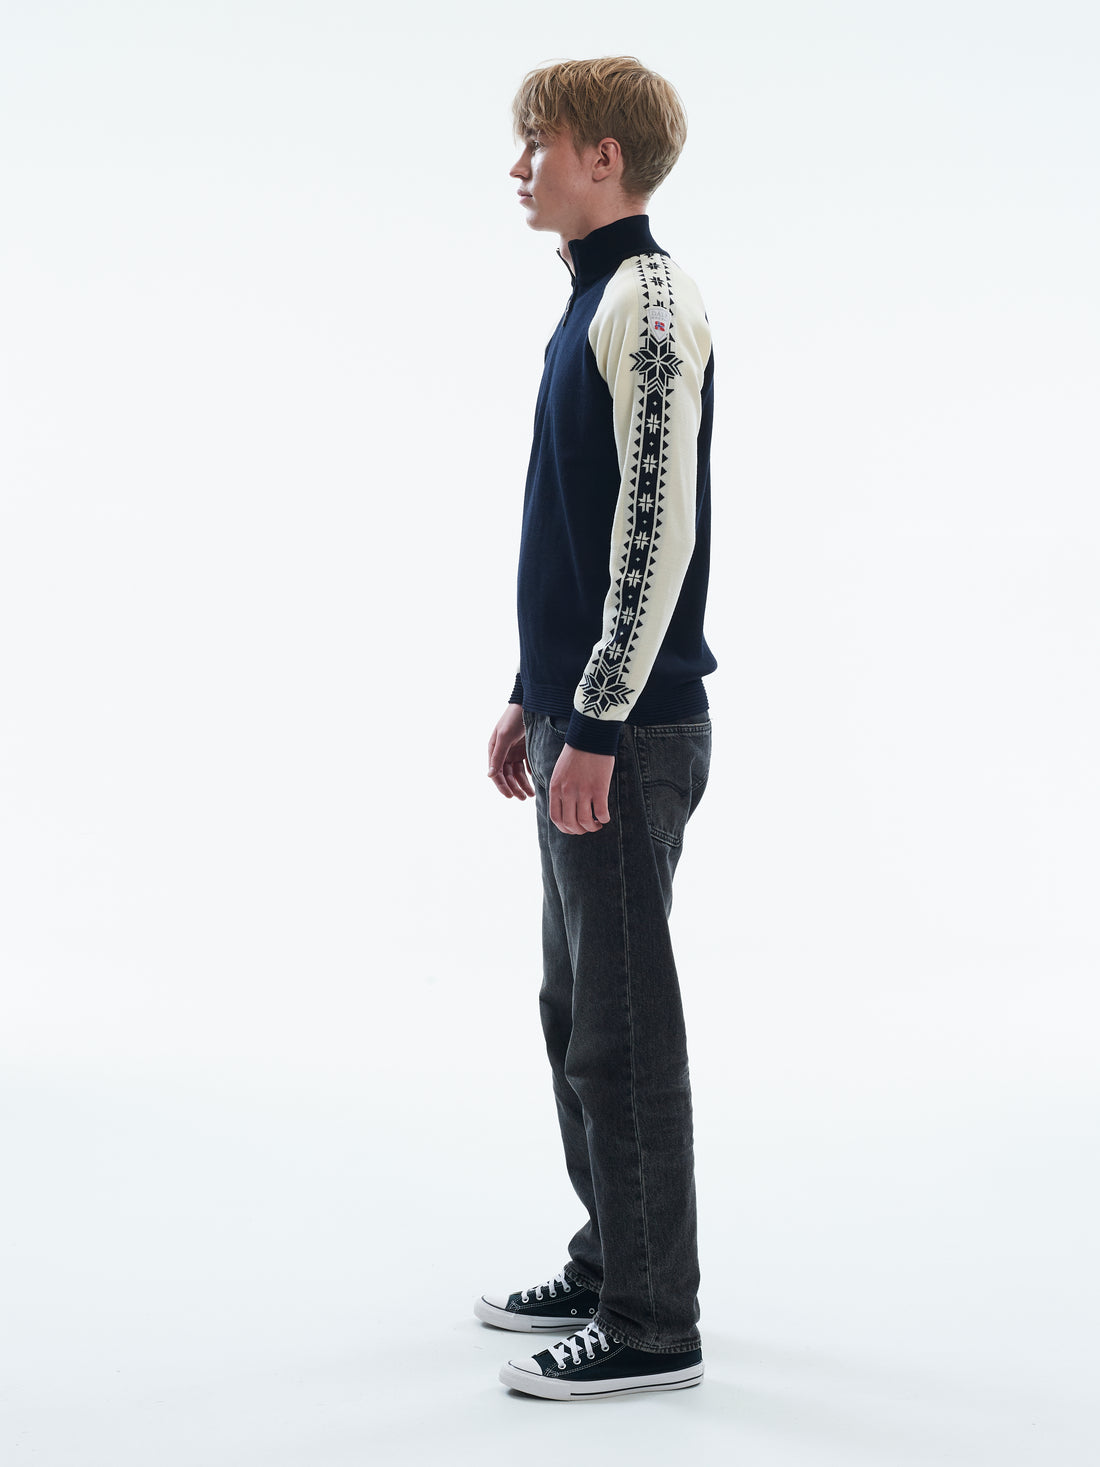 Dale of Norway - Geilo Men's Sweater - Black